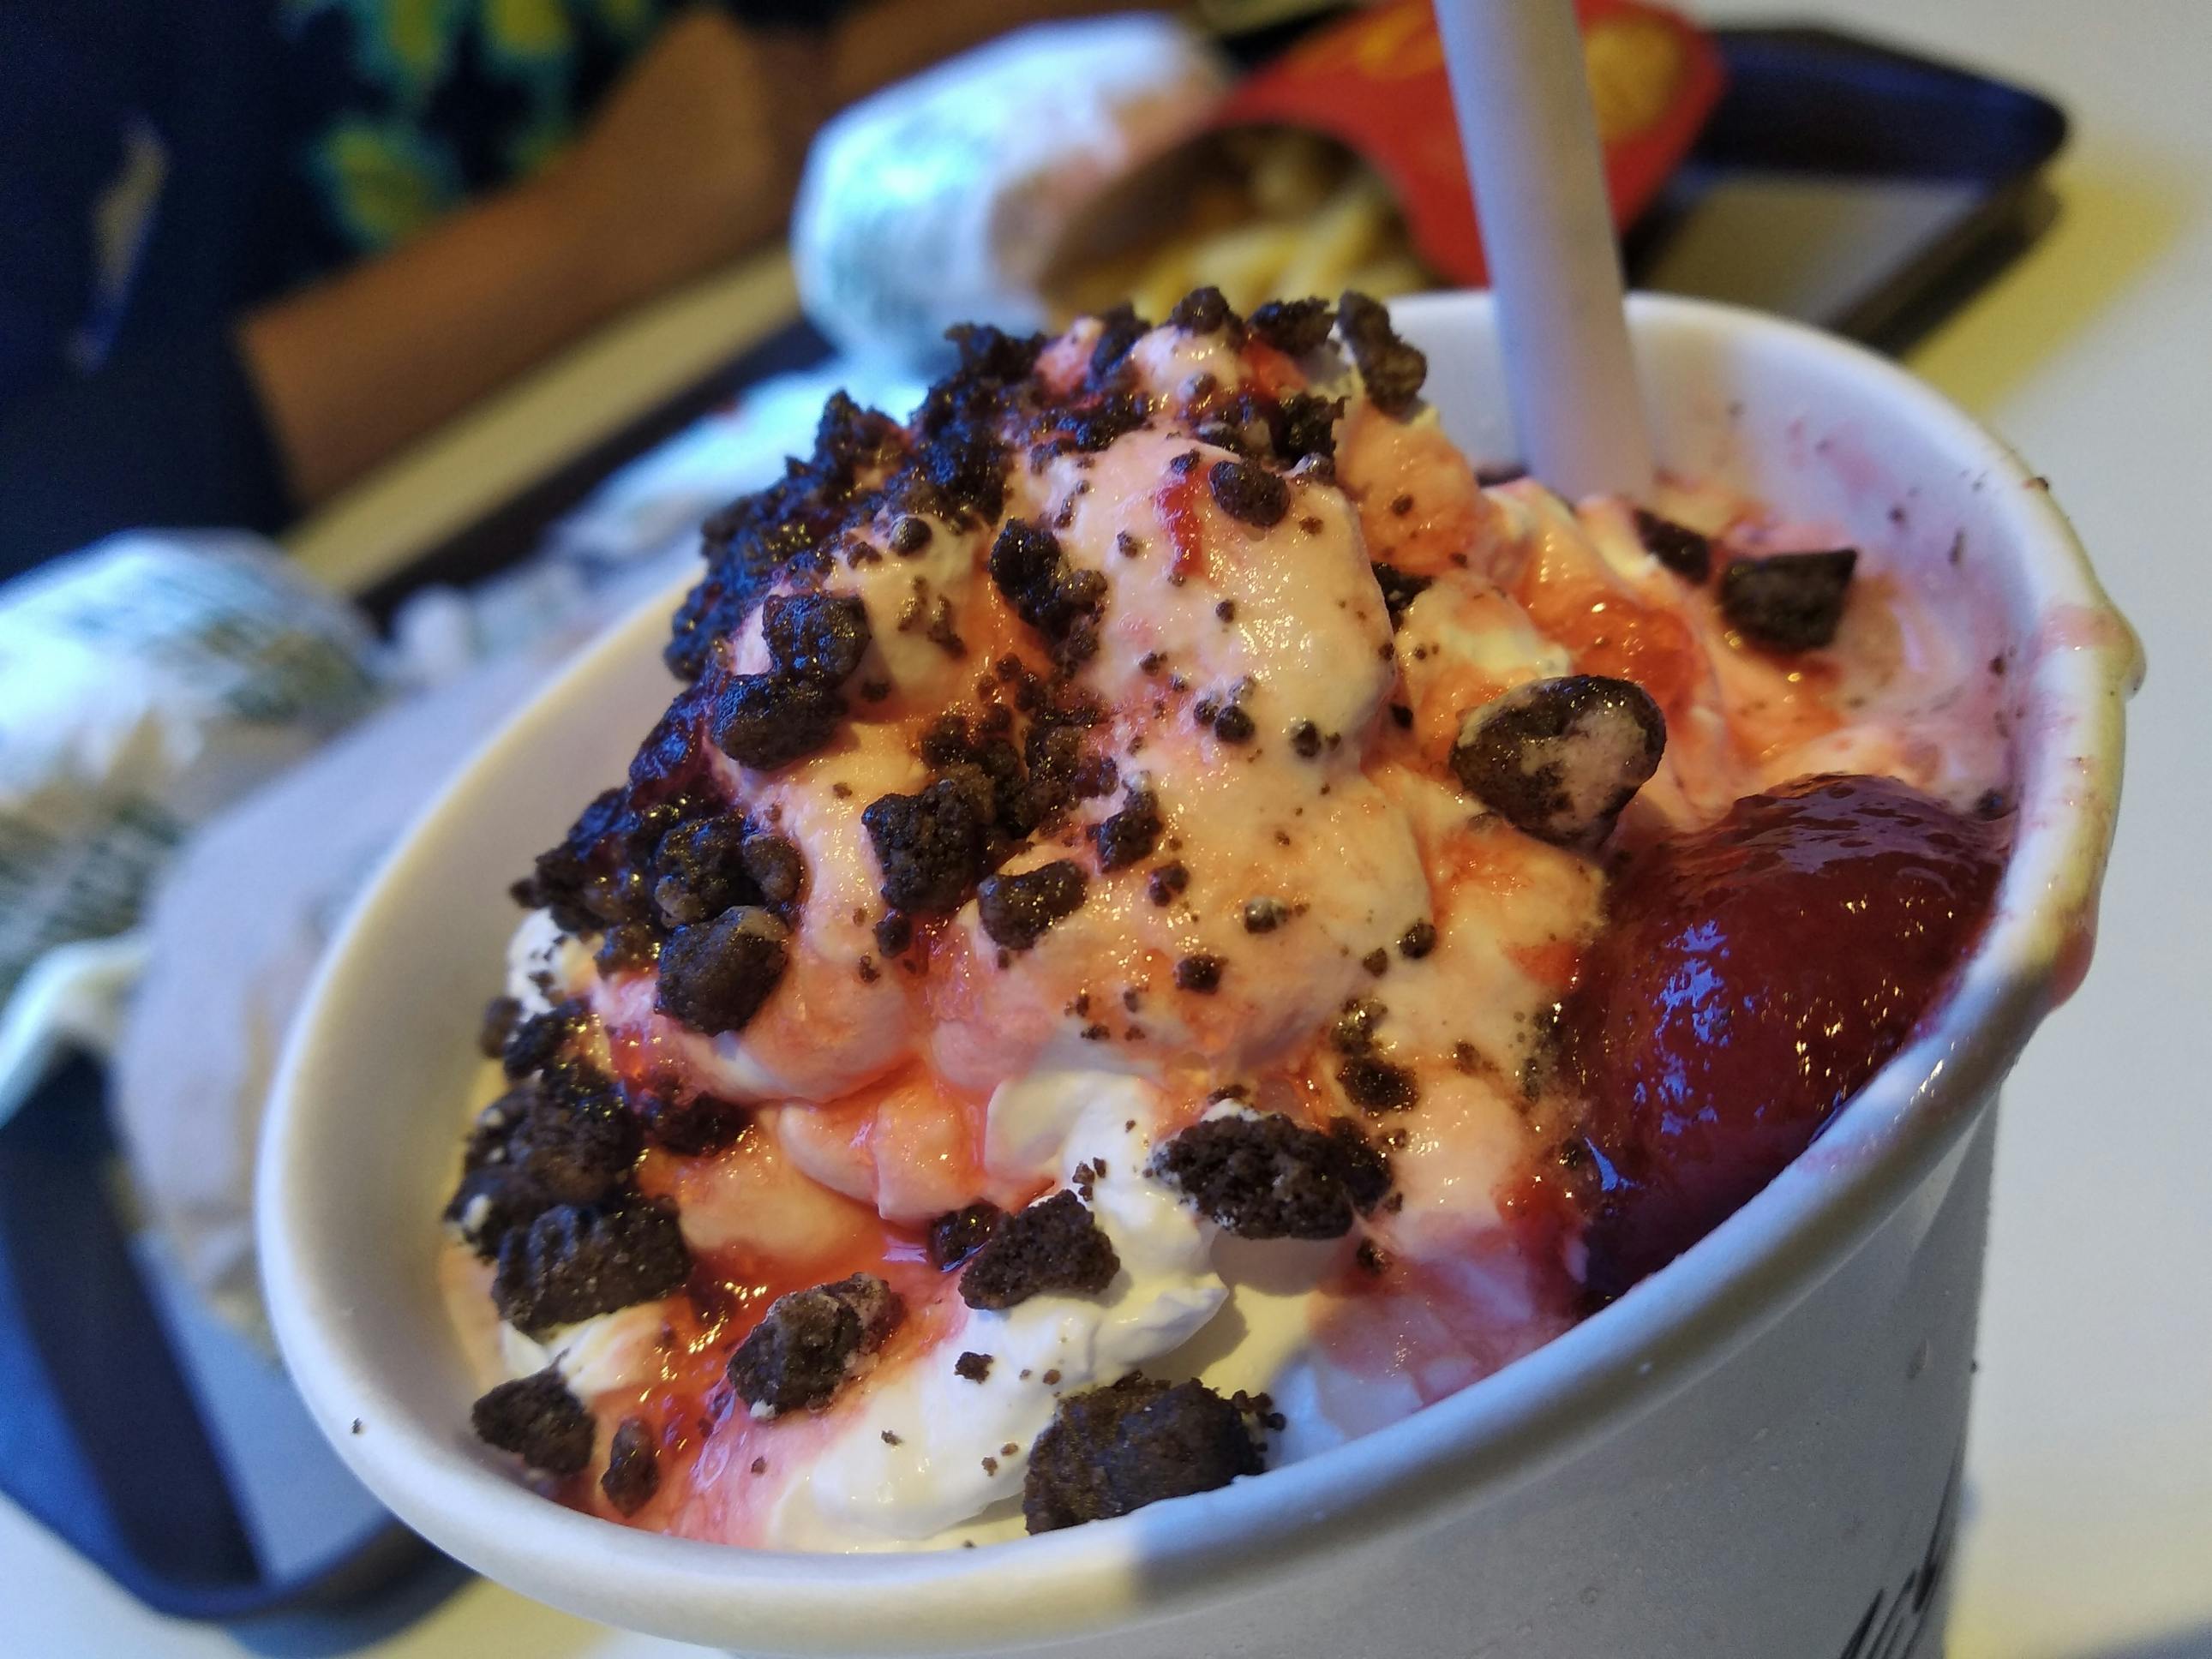 A strawberry milkshake/Oreo McFlurry mashup